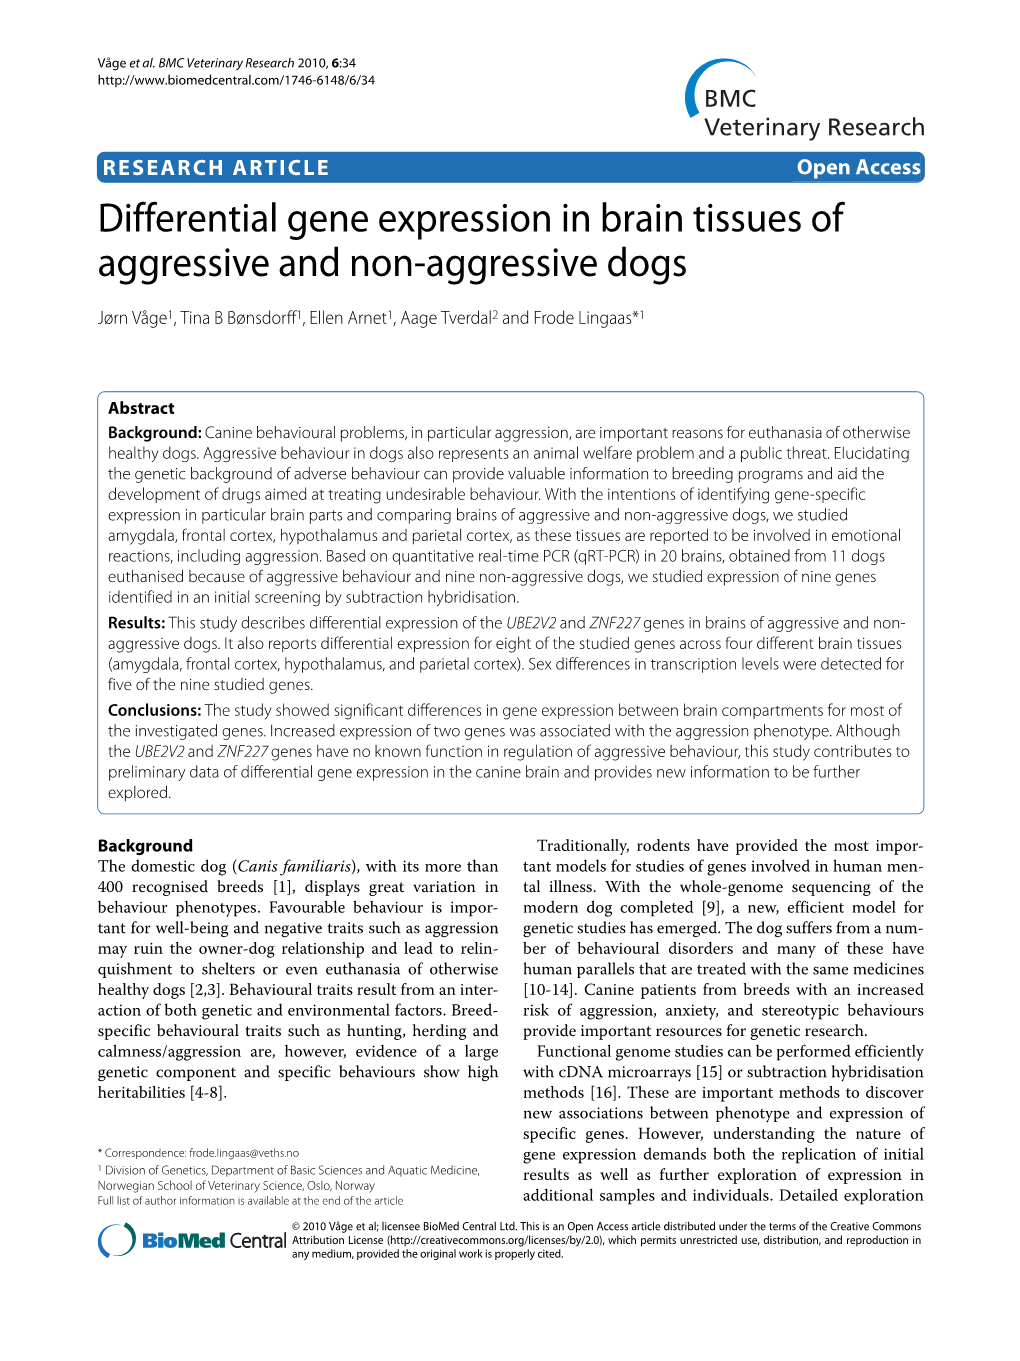 Differential Gene Expression in Brain Tissues of Aggressive and Non-Aggressive Dogs BMC Veterinary Research 2010, 6:34